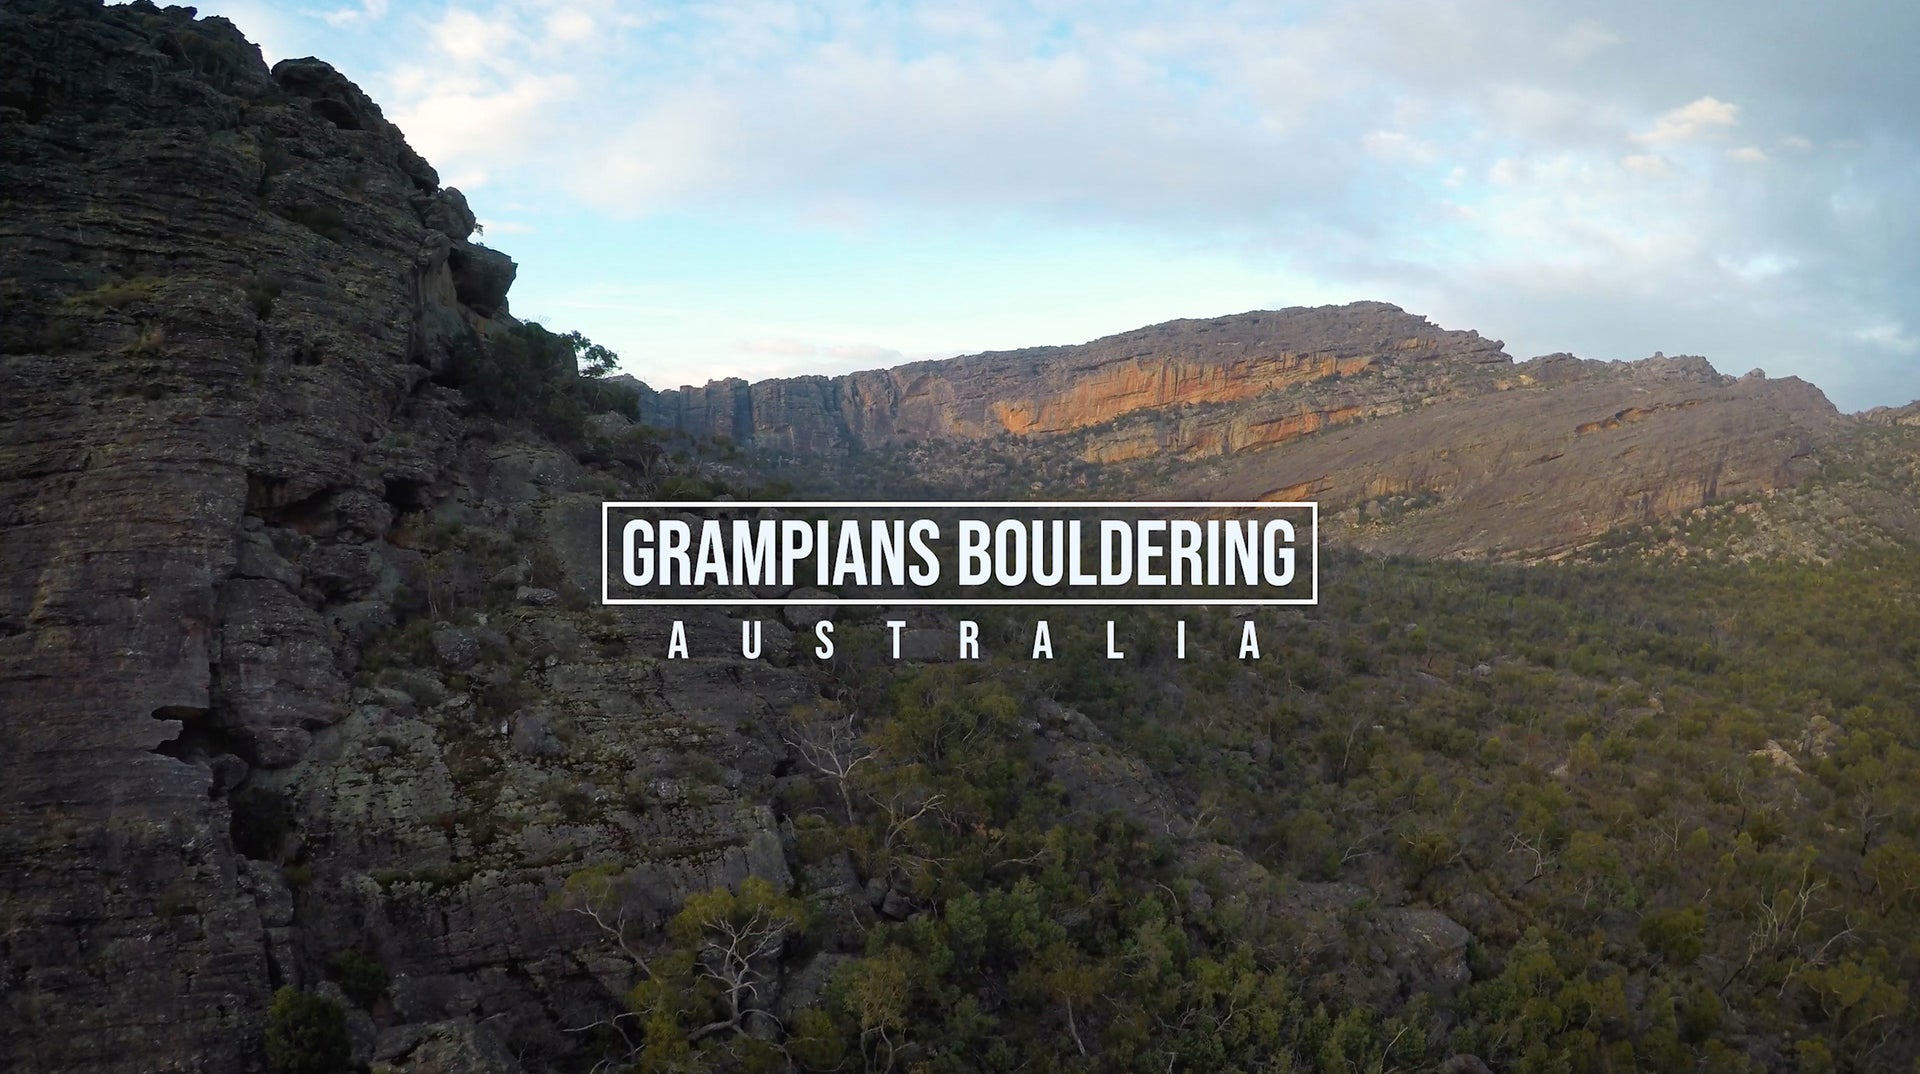 Athlete Christopher Miller bouldering in the Grampians, Australia